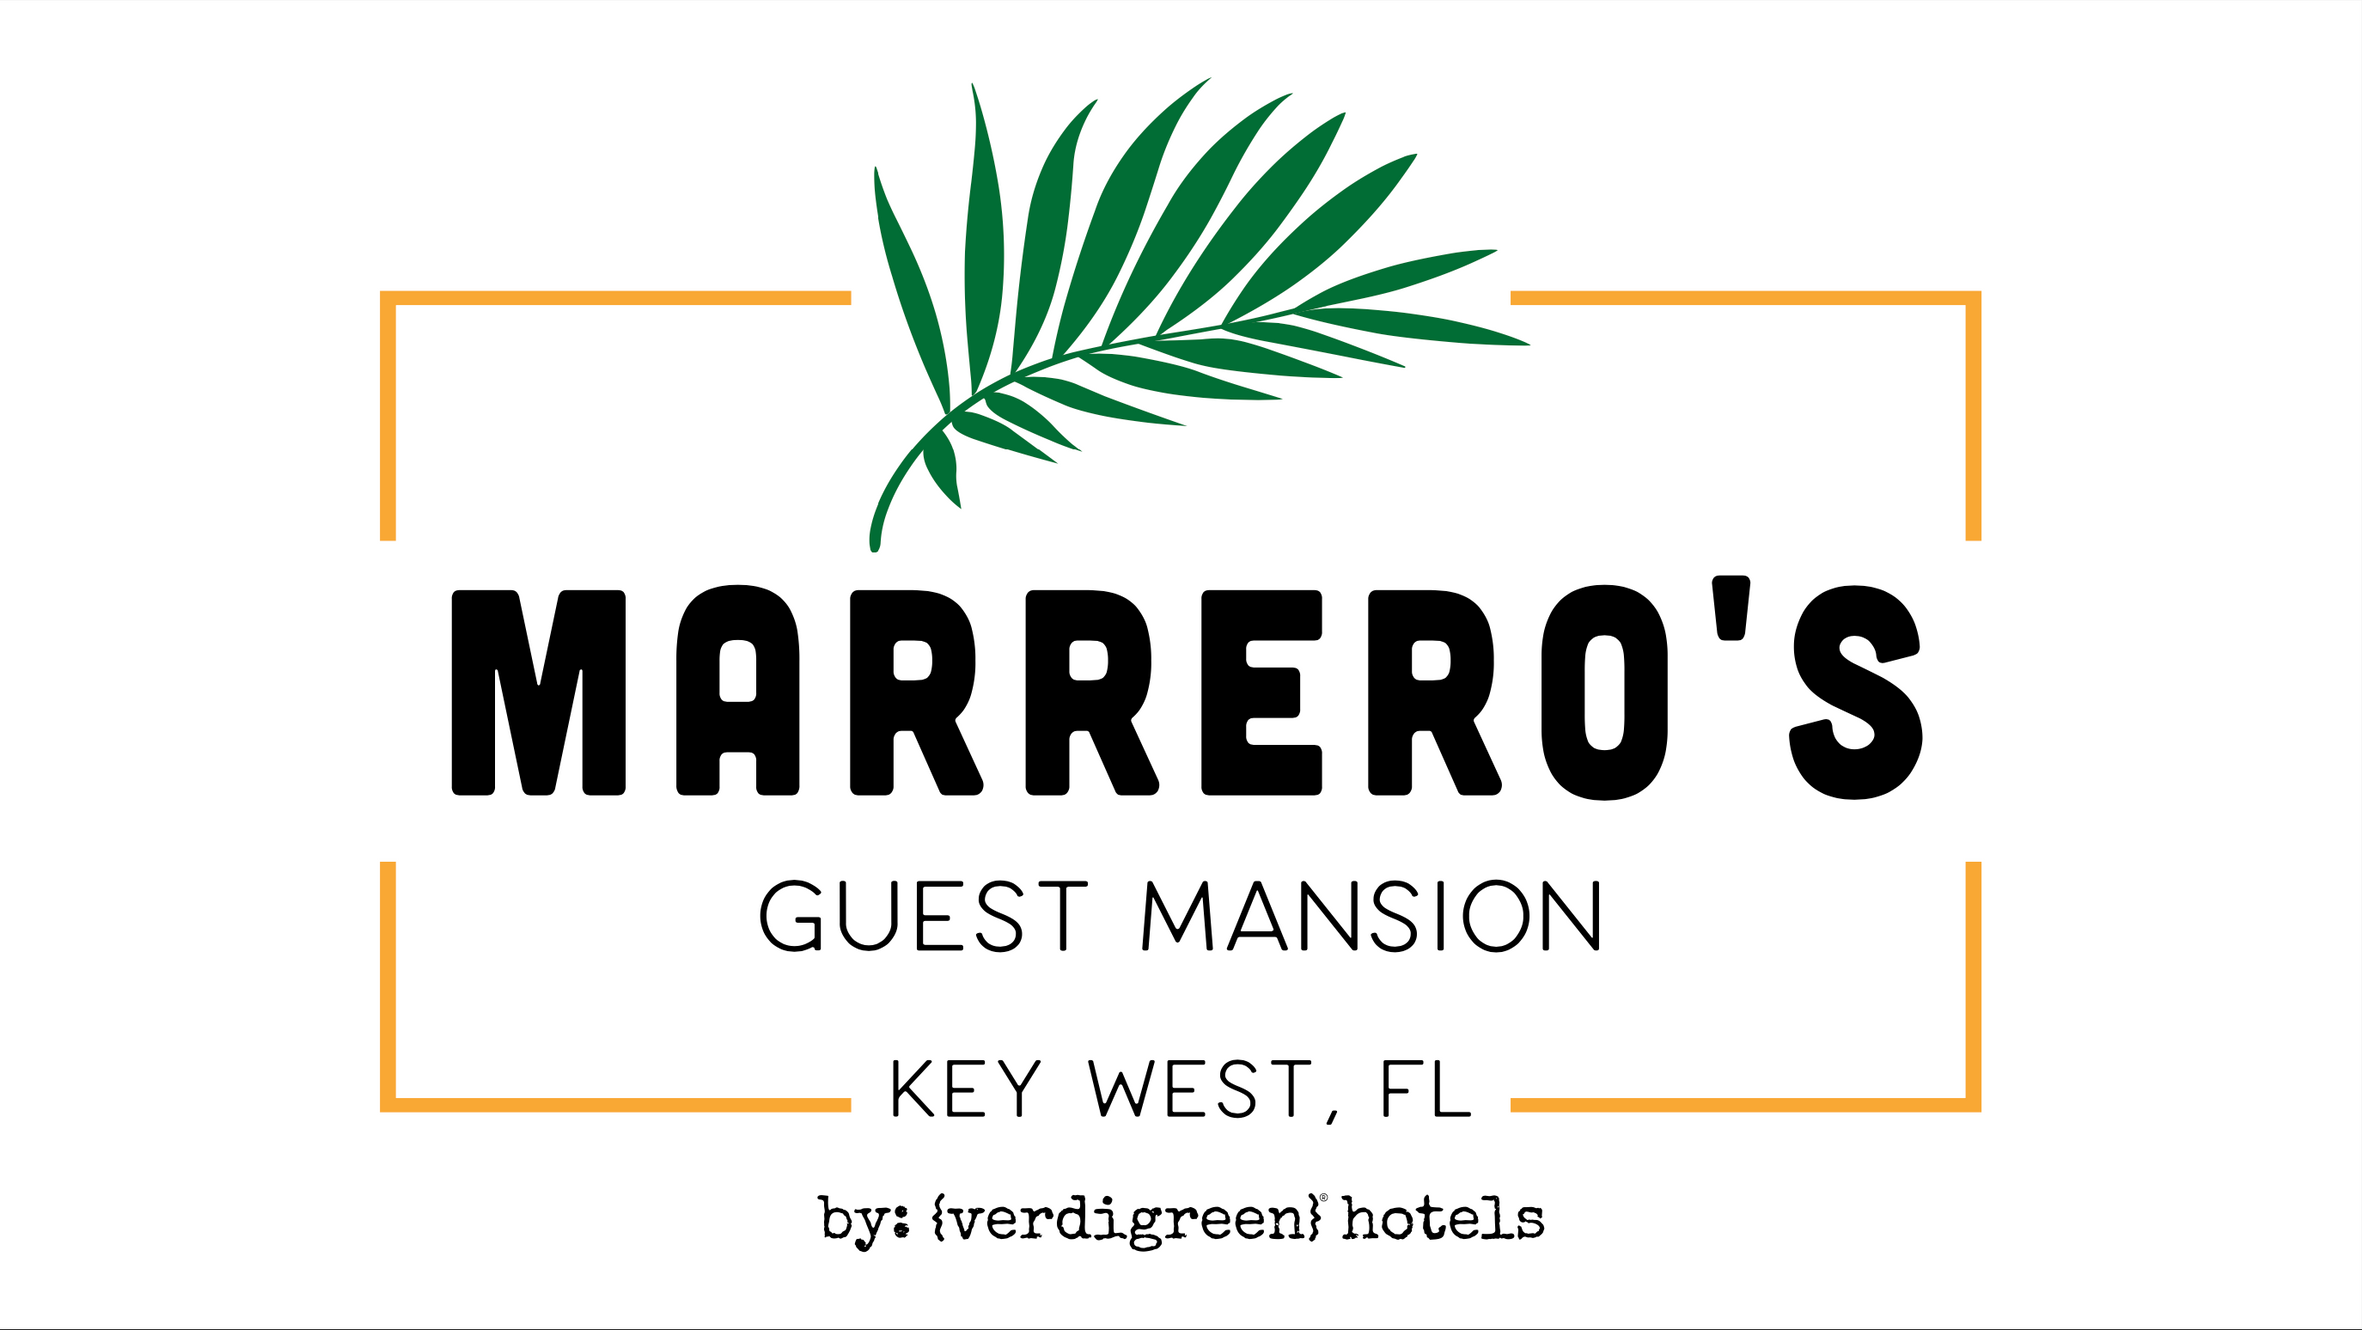 Marrero's Guest Mansion